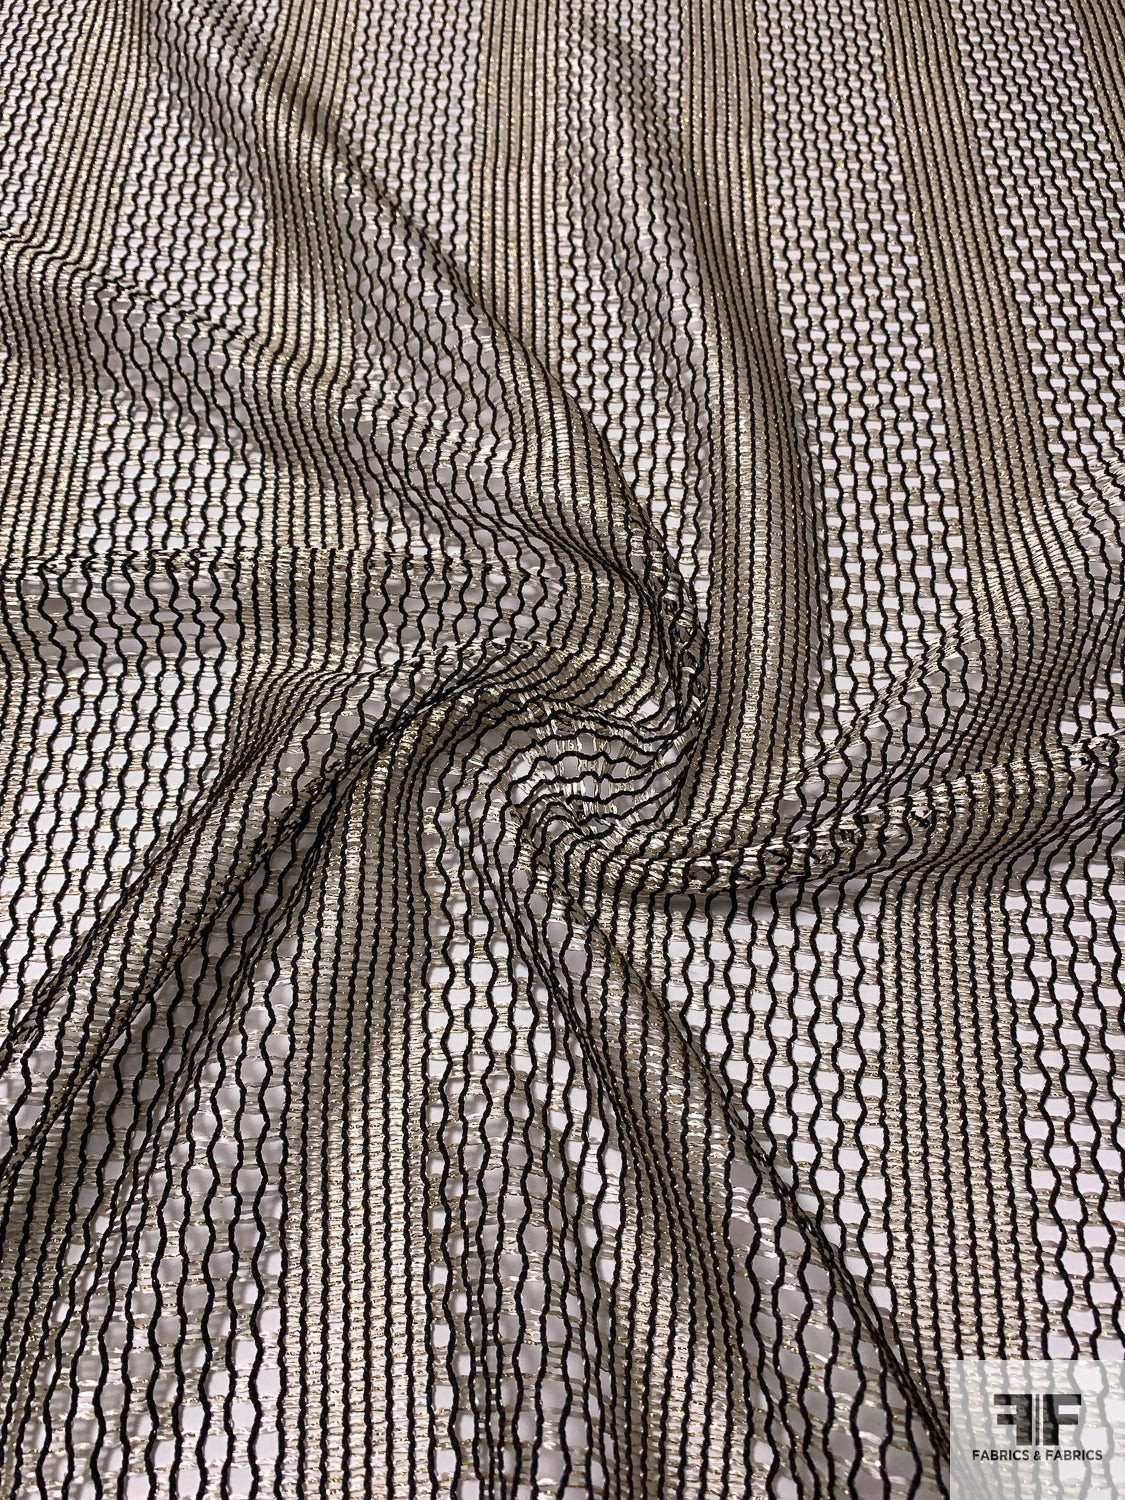 Striped Open-Weave Metallic Mesh Lace - Gold/Black/Off-White